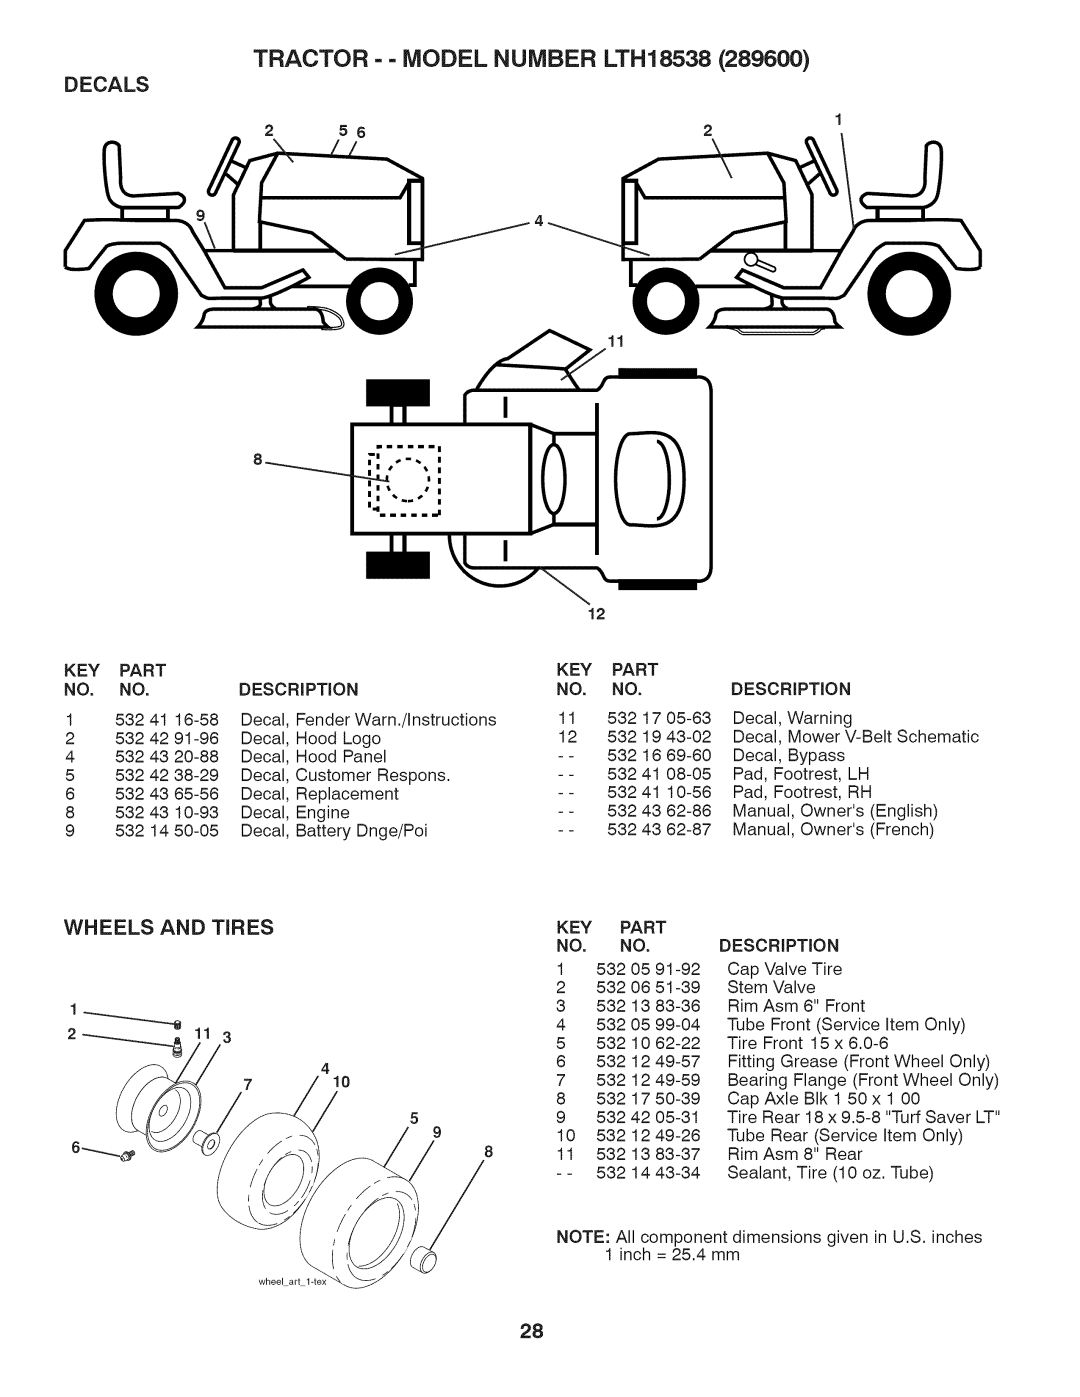 Husqvarna owner manual TRACTOR - - MODEL NUMBER LTH18538, Decals, Wheels, And Tires, Description 